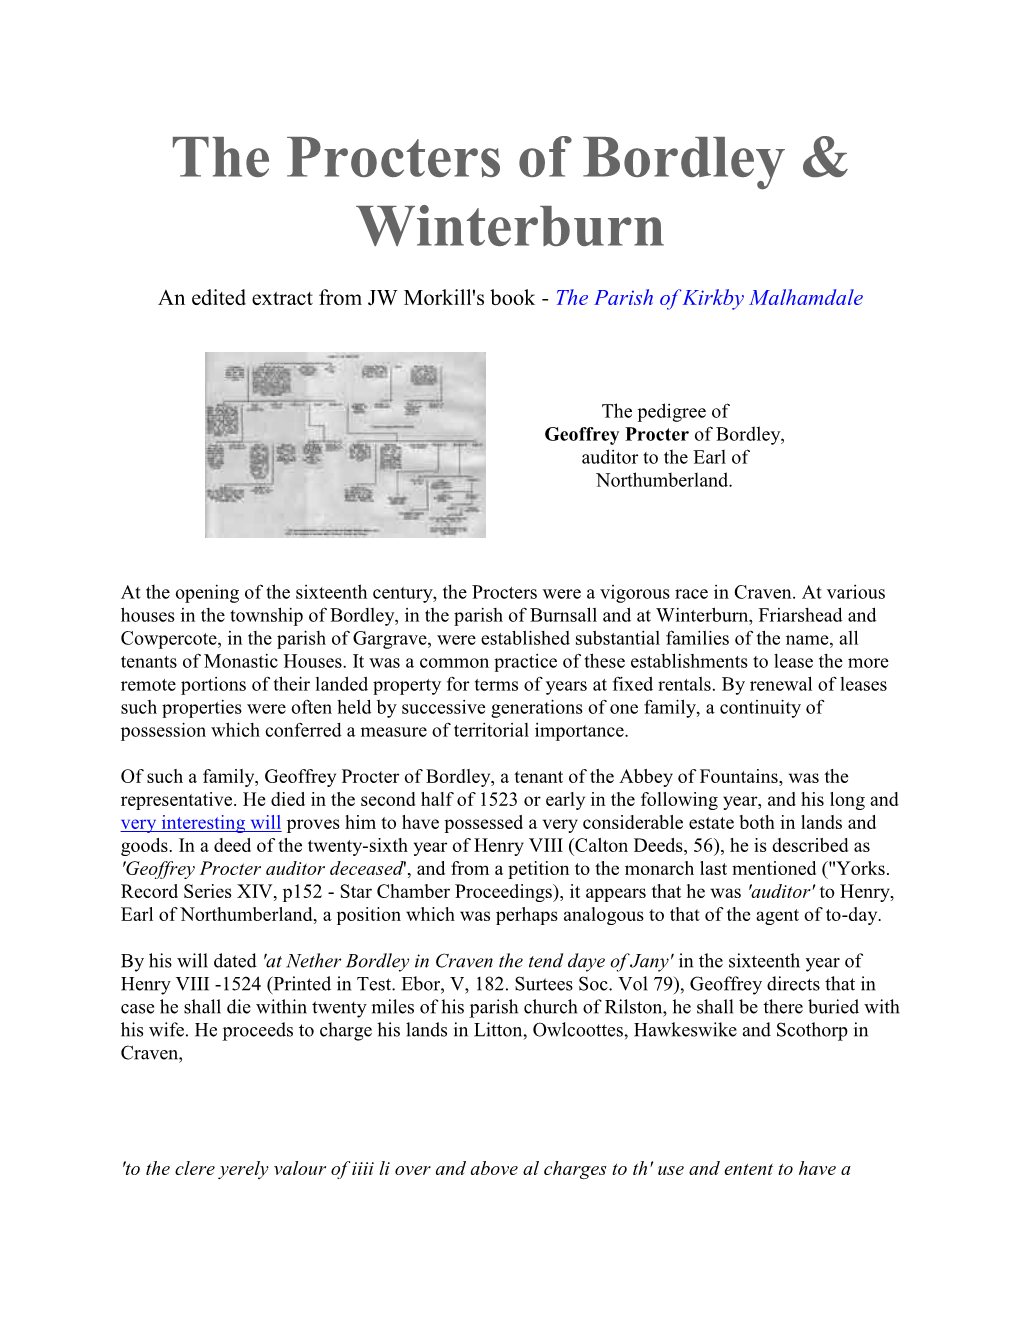 The Procters of Bordley & Winterburn